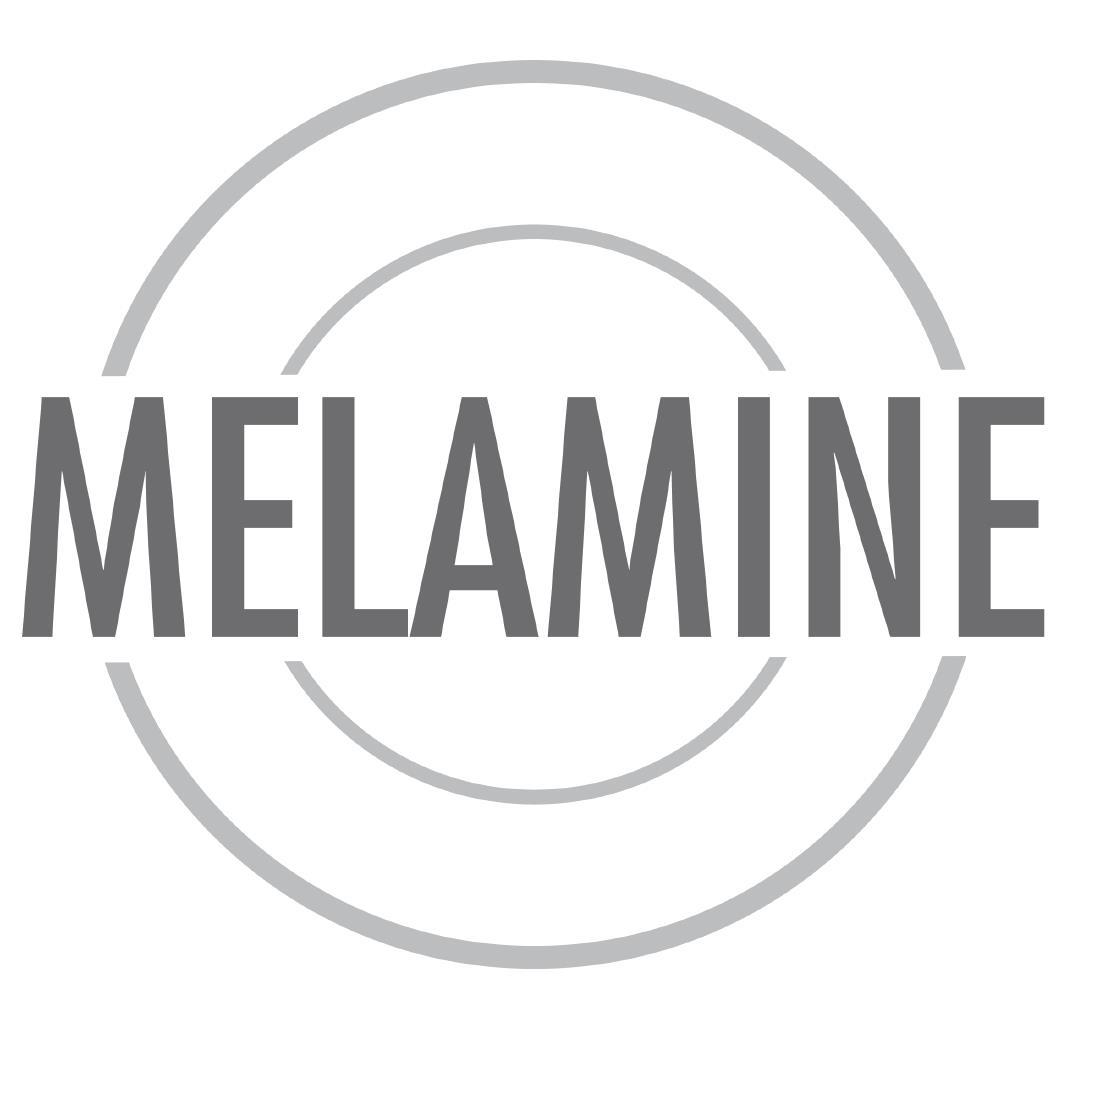 Olympia Kristallon Melamine Fluted Ramekins Black 89mm (Pack of 12) - DM165  - 2